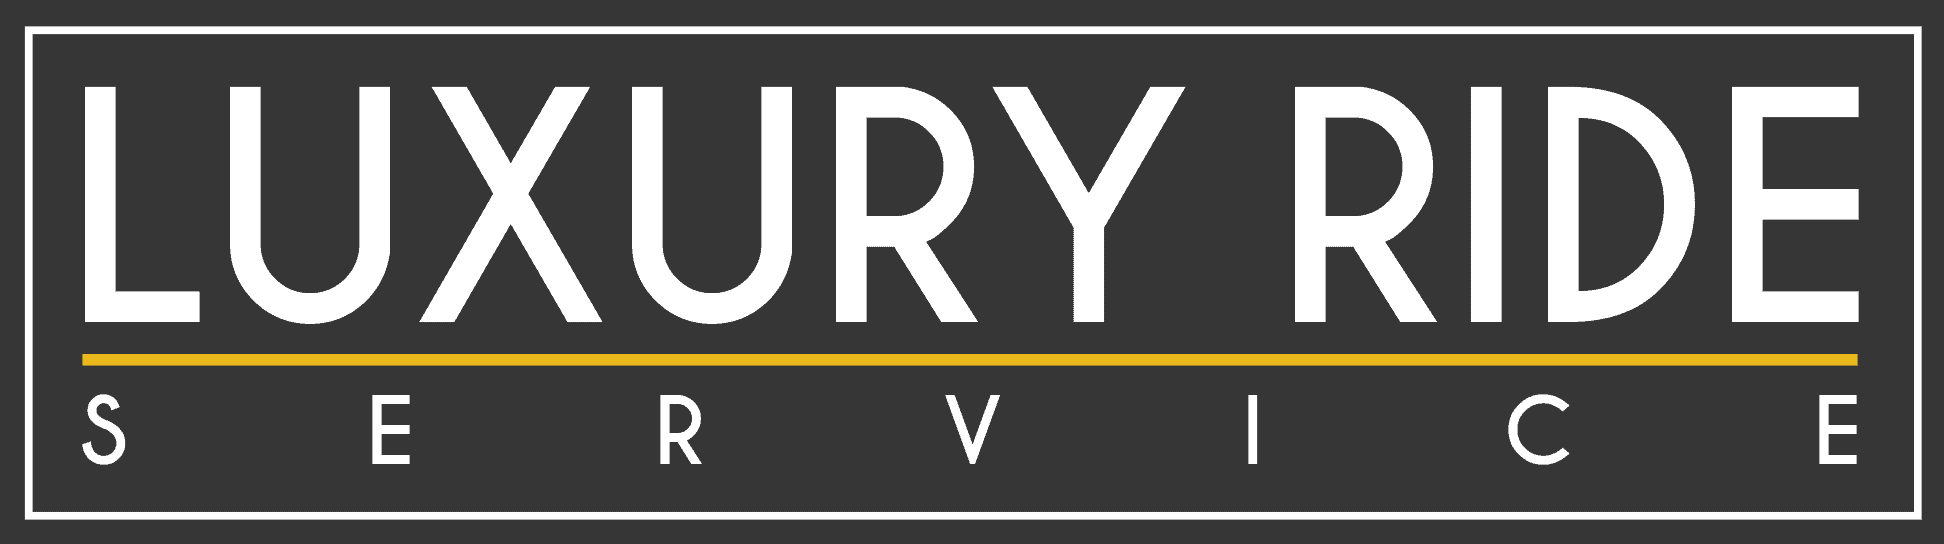 Luxury-Ride-Service-Logo